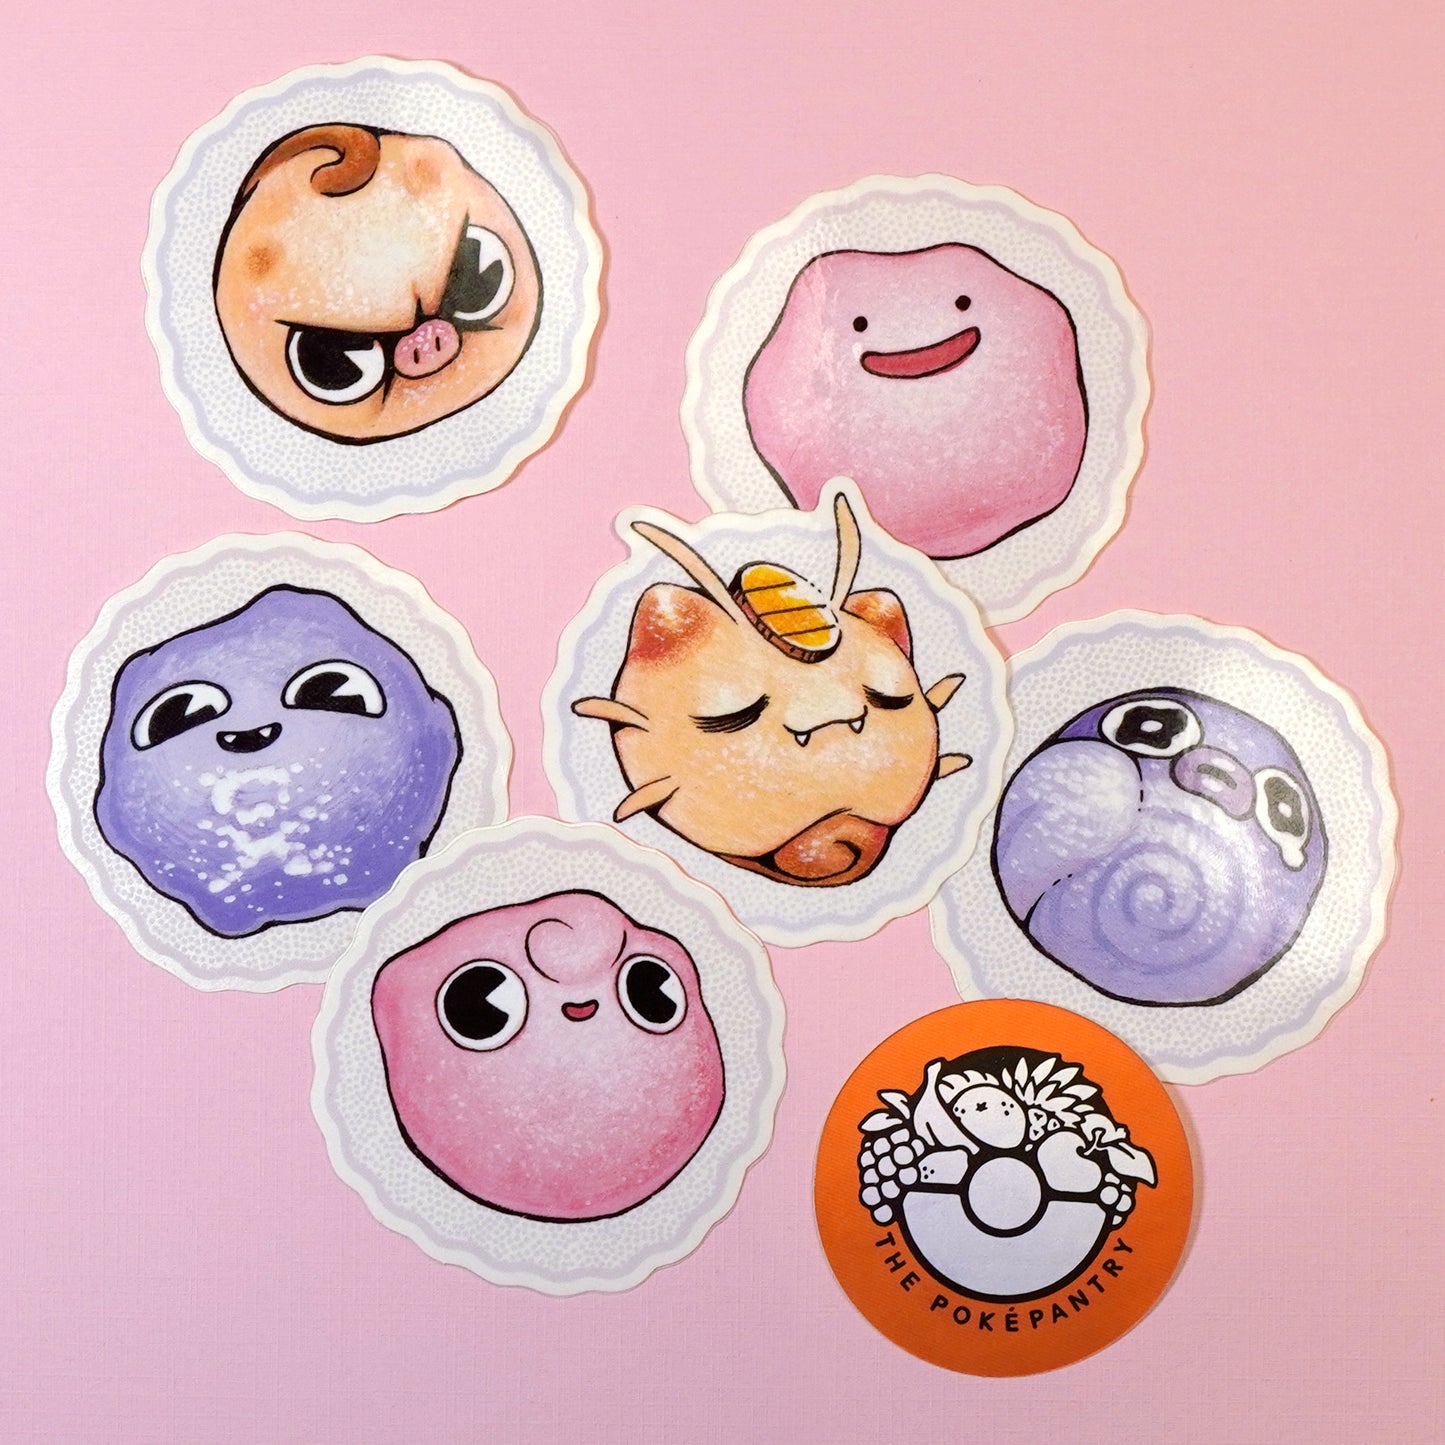 PokéMochi Sticker Pack